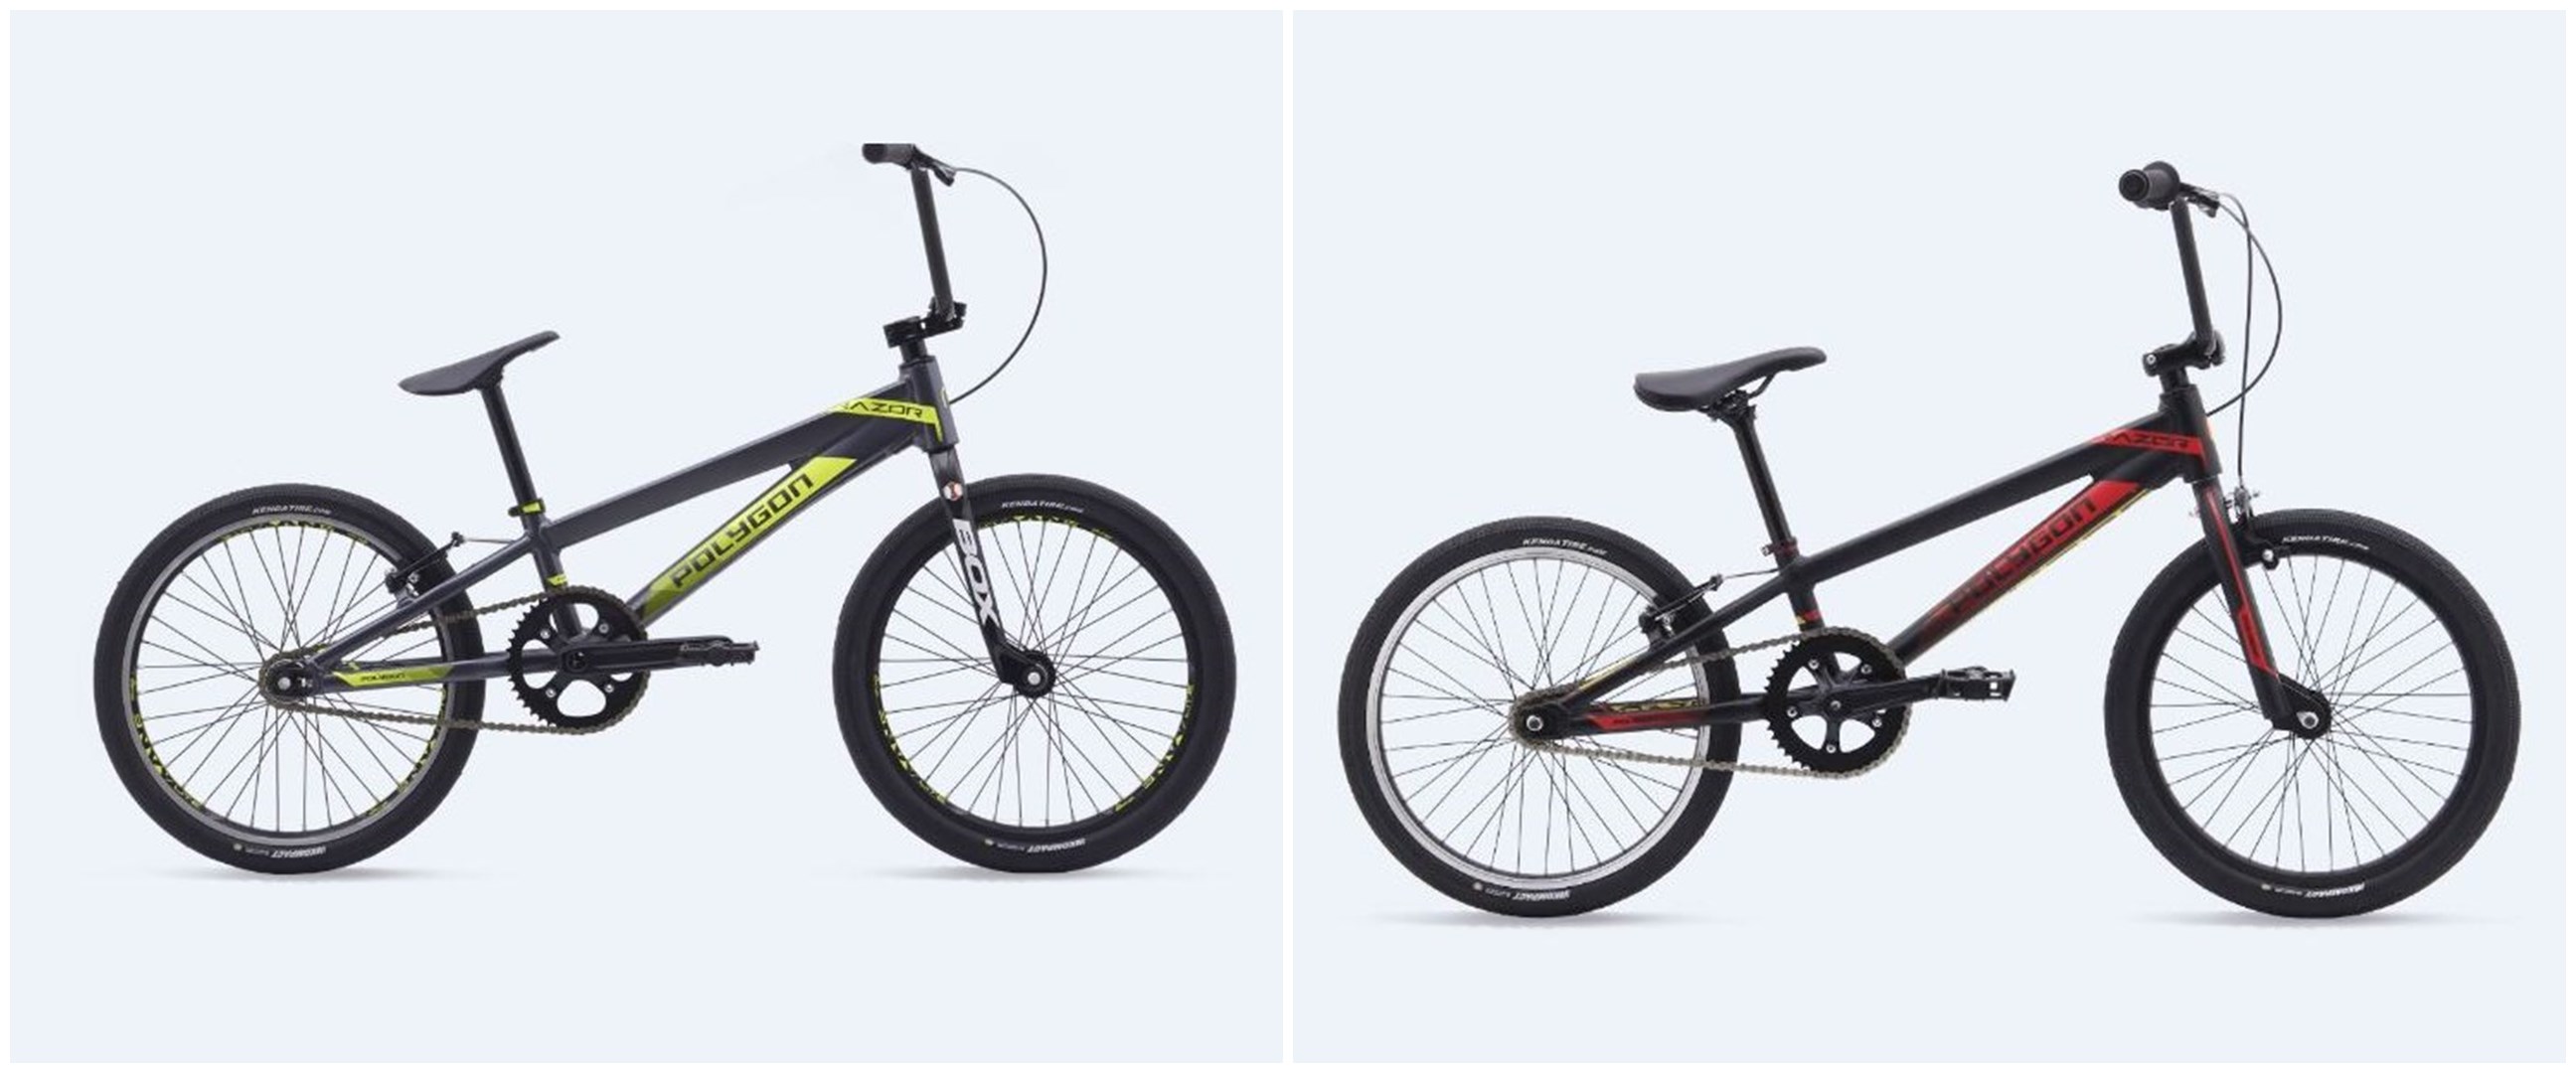 Harga sepeda  Polygon  BMX  Razor dan spesifikasinya gesit 